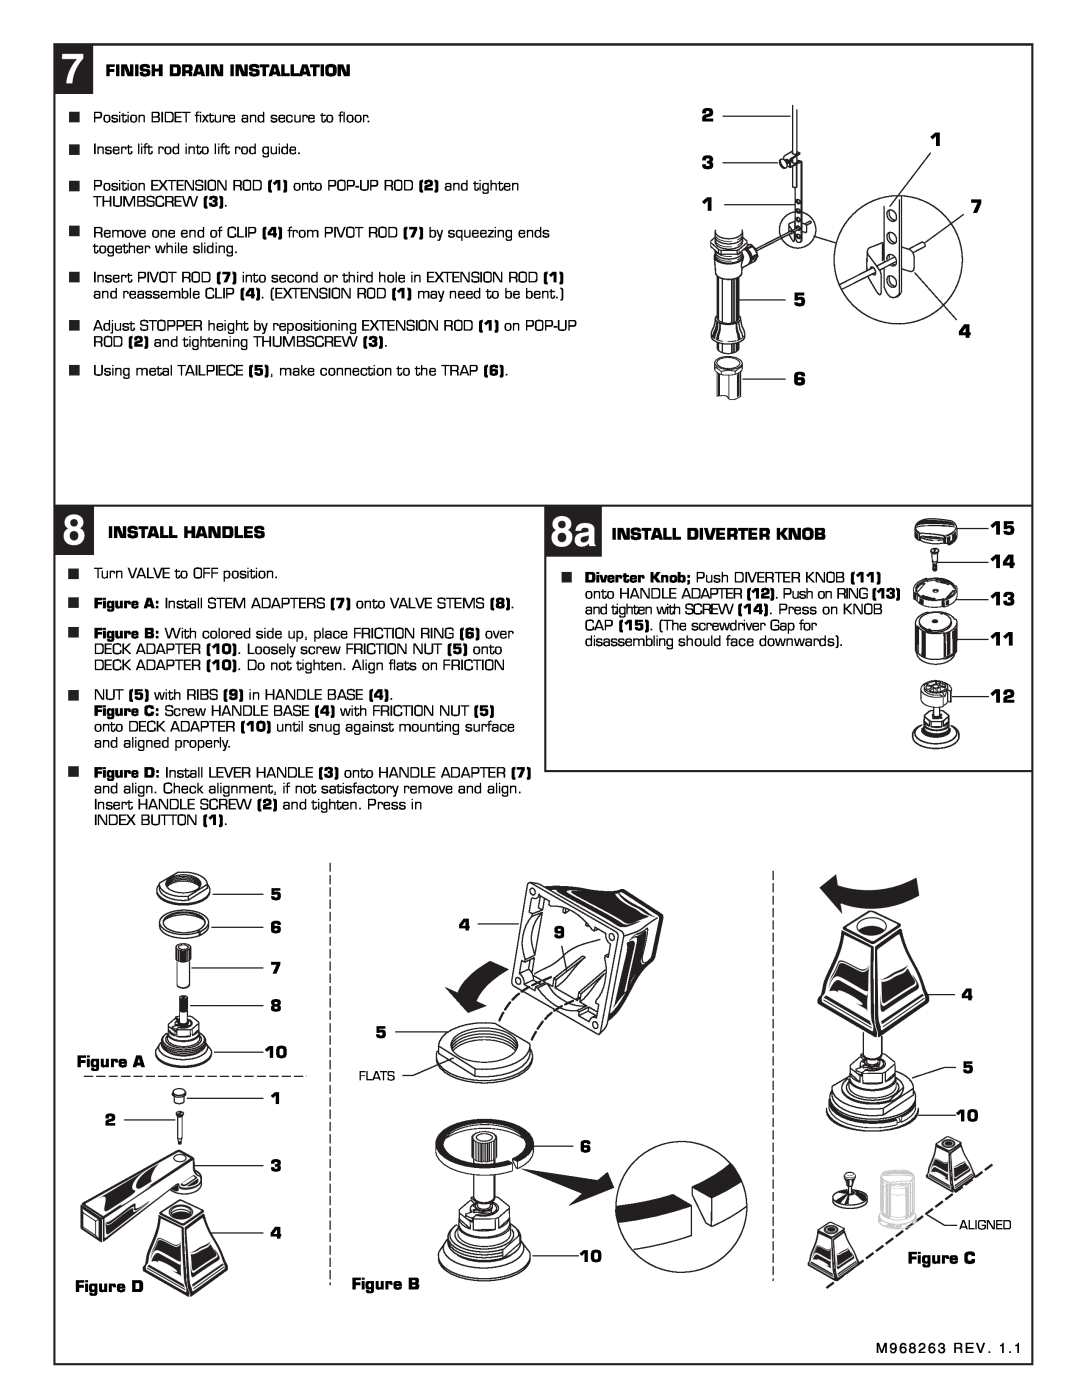 American Standard 2555.400  Finish Drain Installation,  Install Handles, B Install Diverter Knob, Figure A, Figure C 